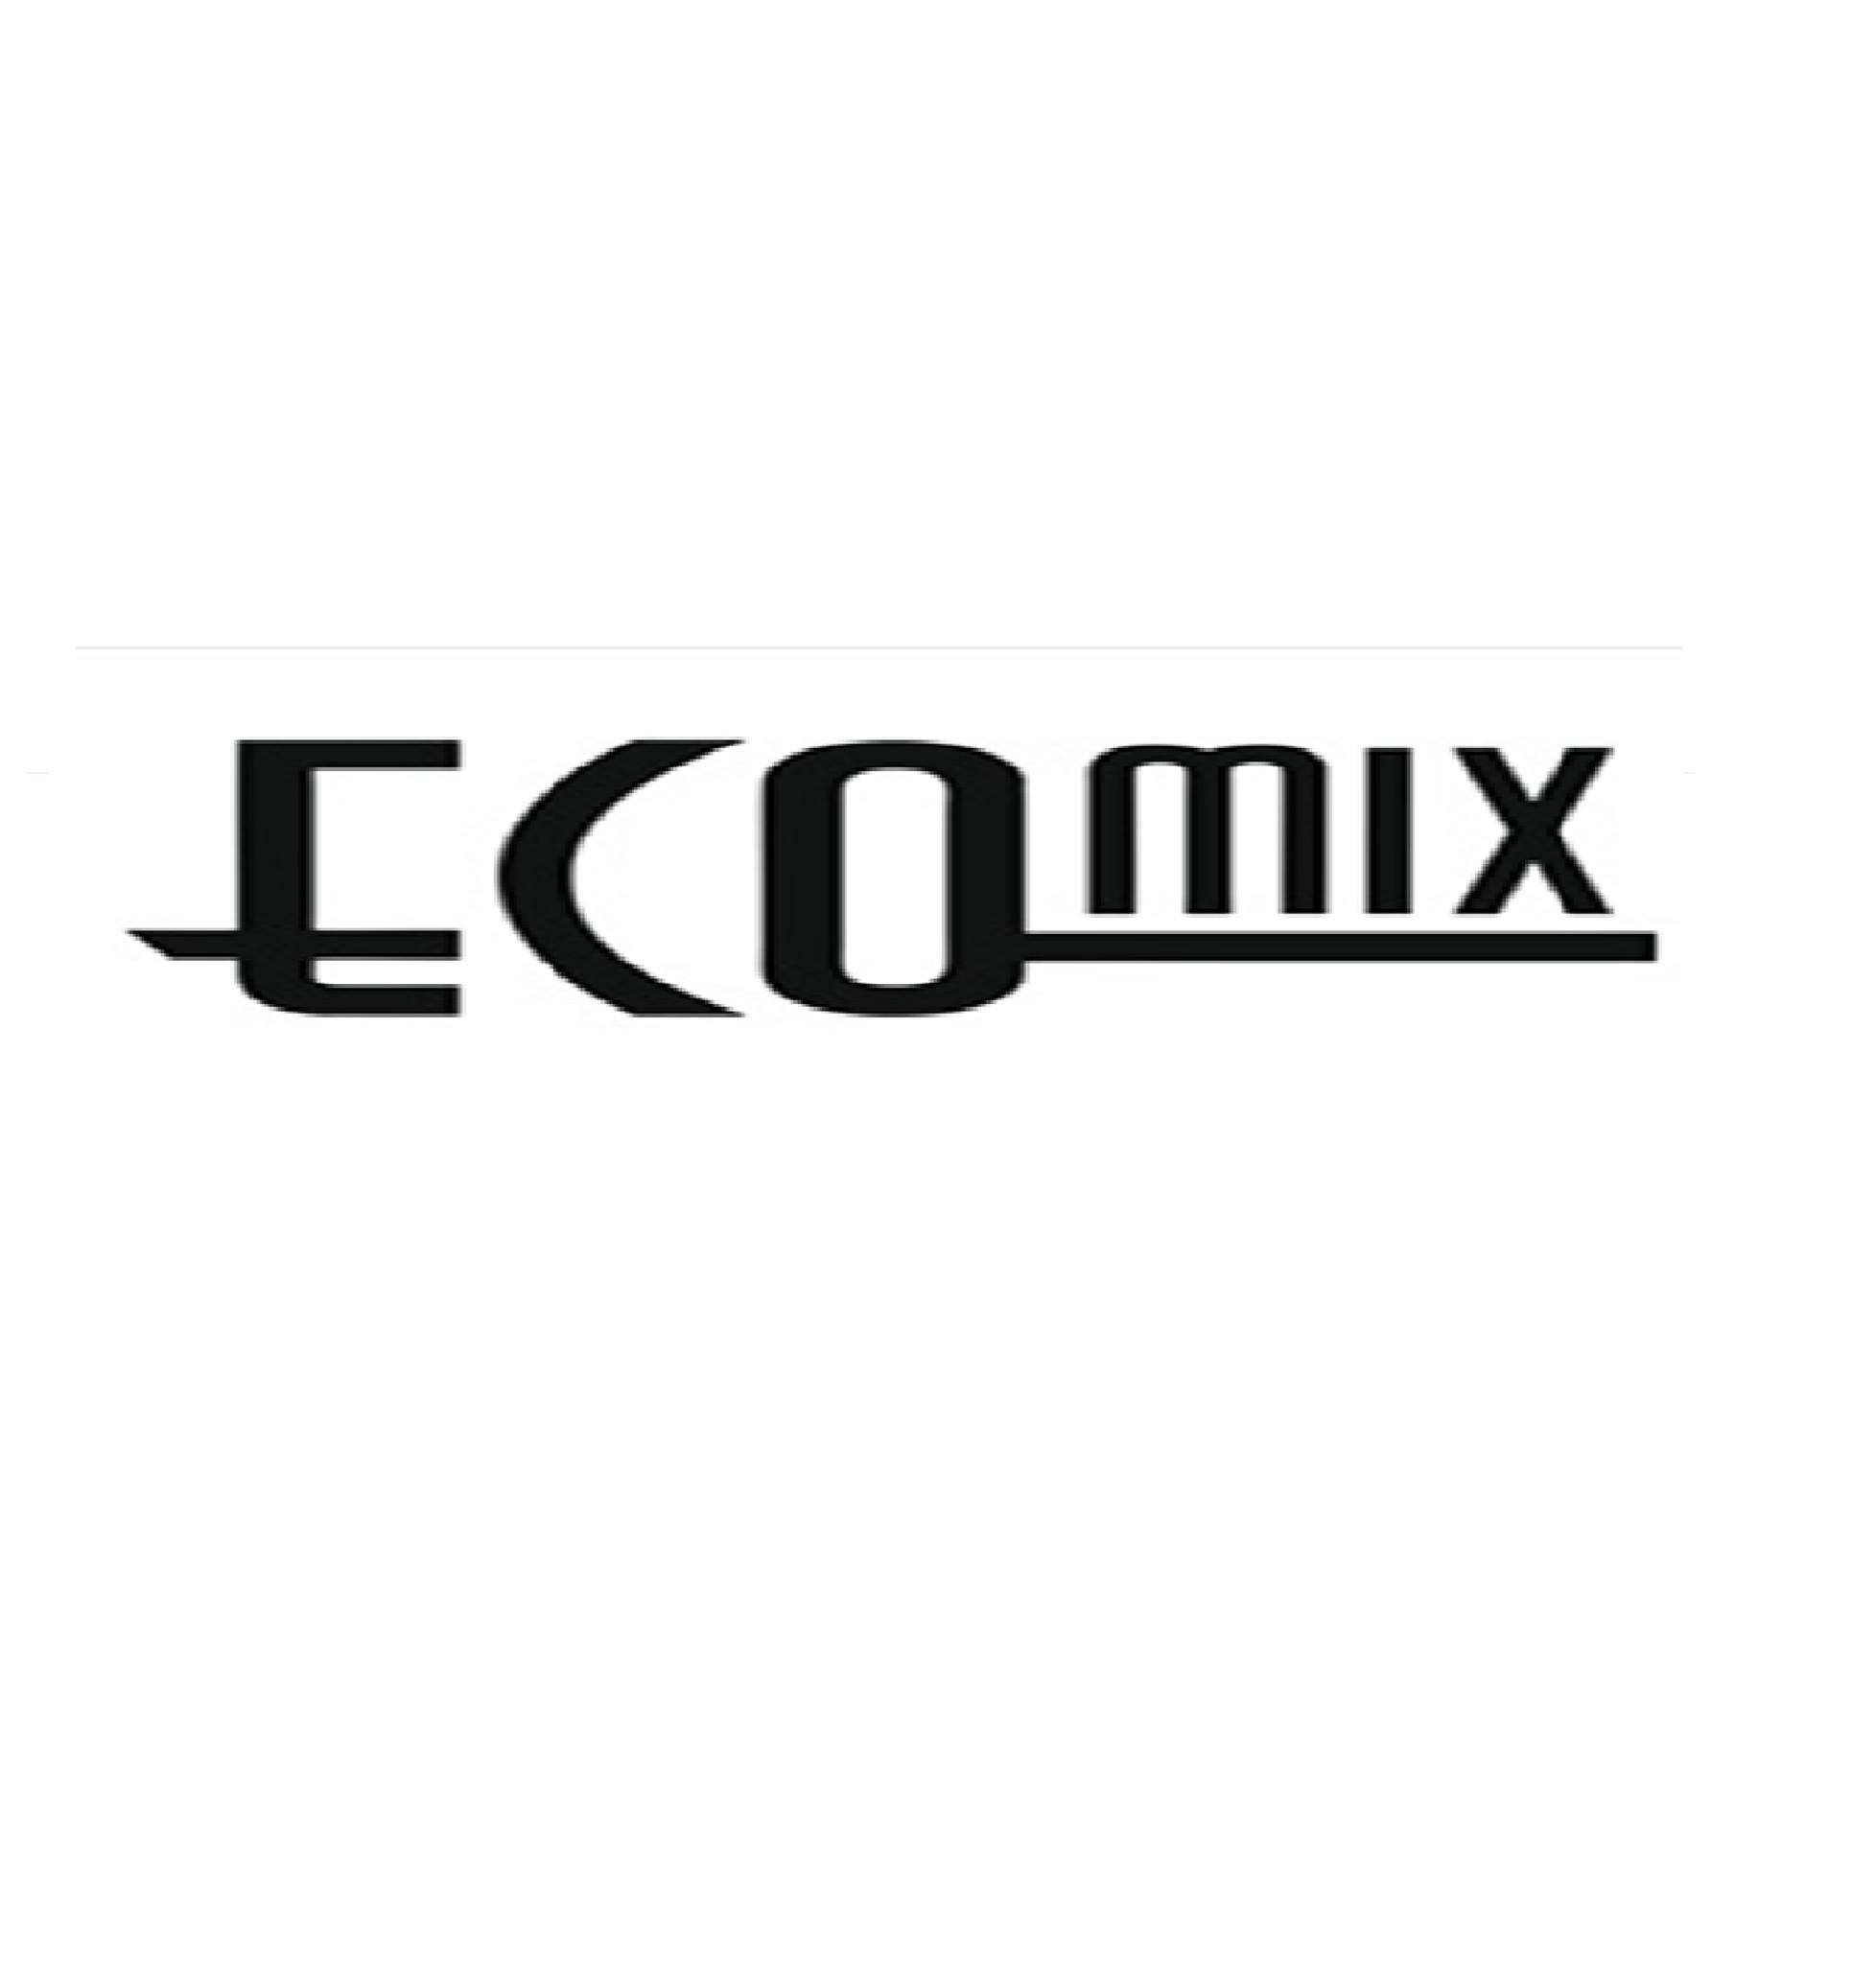 Ecomix წარმომადგენლობა საქართველოში